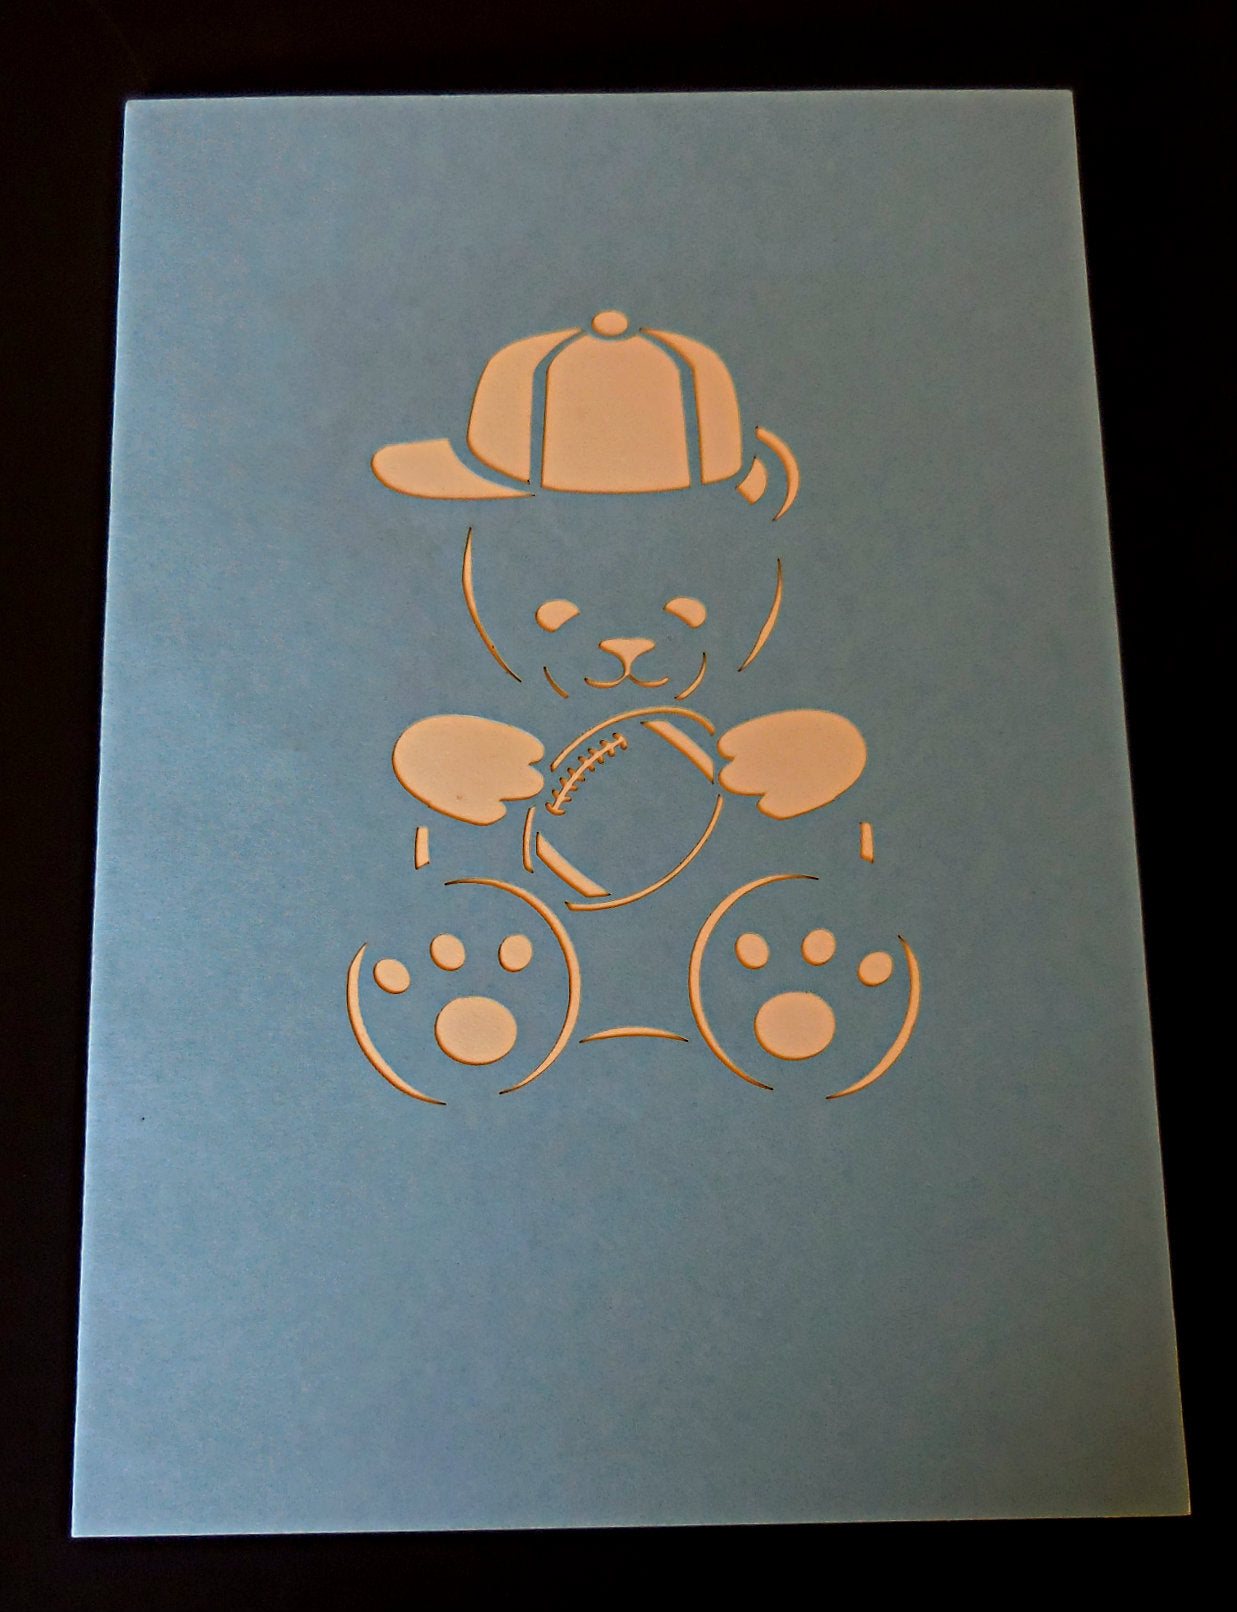 CUTPOPUP Get Well Soon Card Pop Up, Birthday 3D Greeting Card (Teddy Bear)